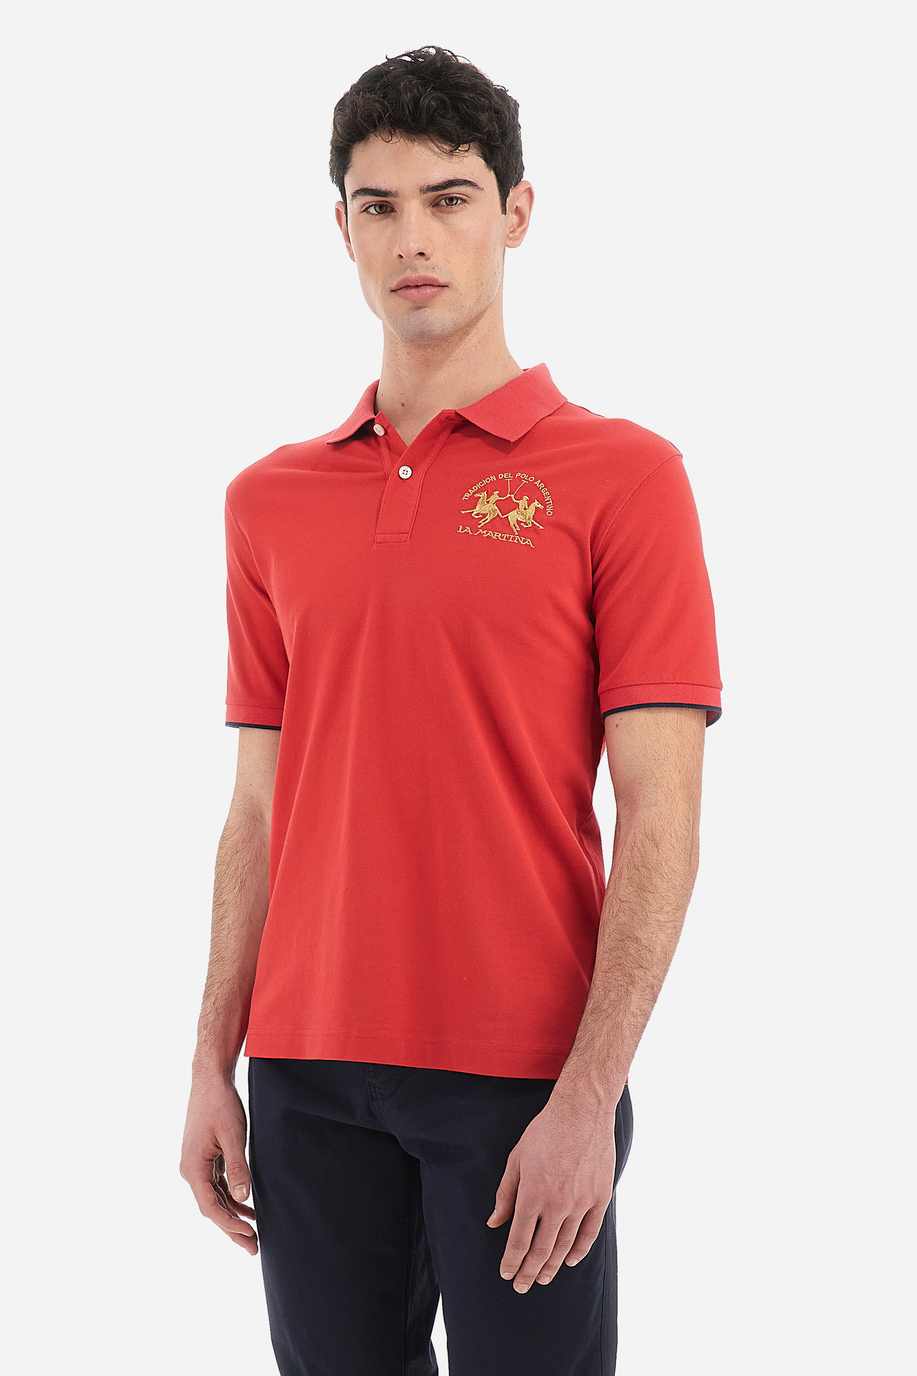 Herren-Kurzarm-Poloshirt aus Stretch-Baumwolle mit normaler Passform - Miguel - Poloshirts | La Martina - Official Online Shop